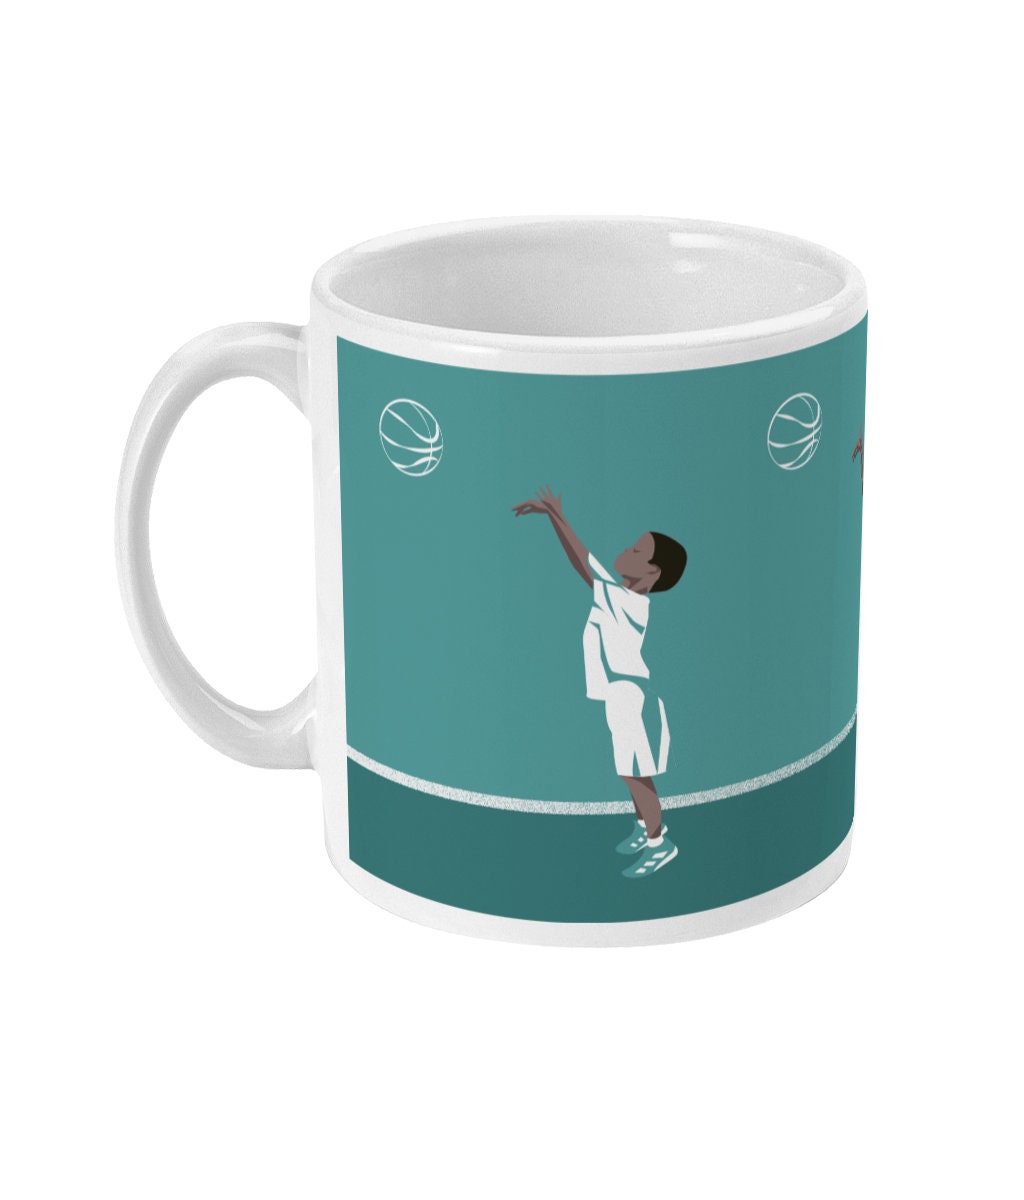 Tasse ou mug basketball "Le boy qui fait du basket" - Personnalisable